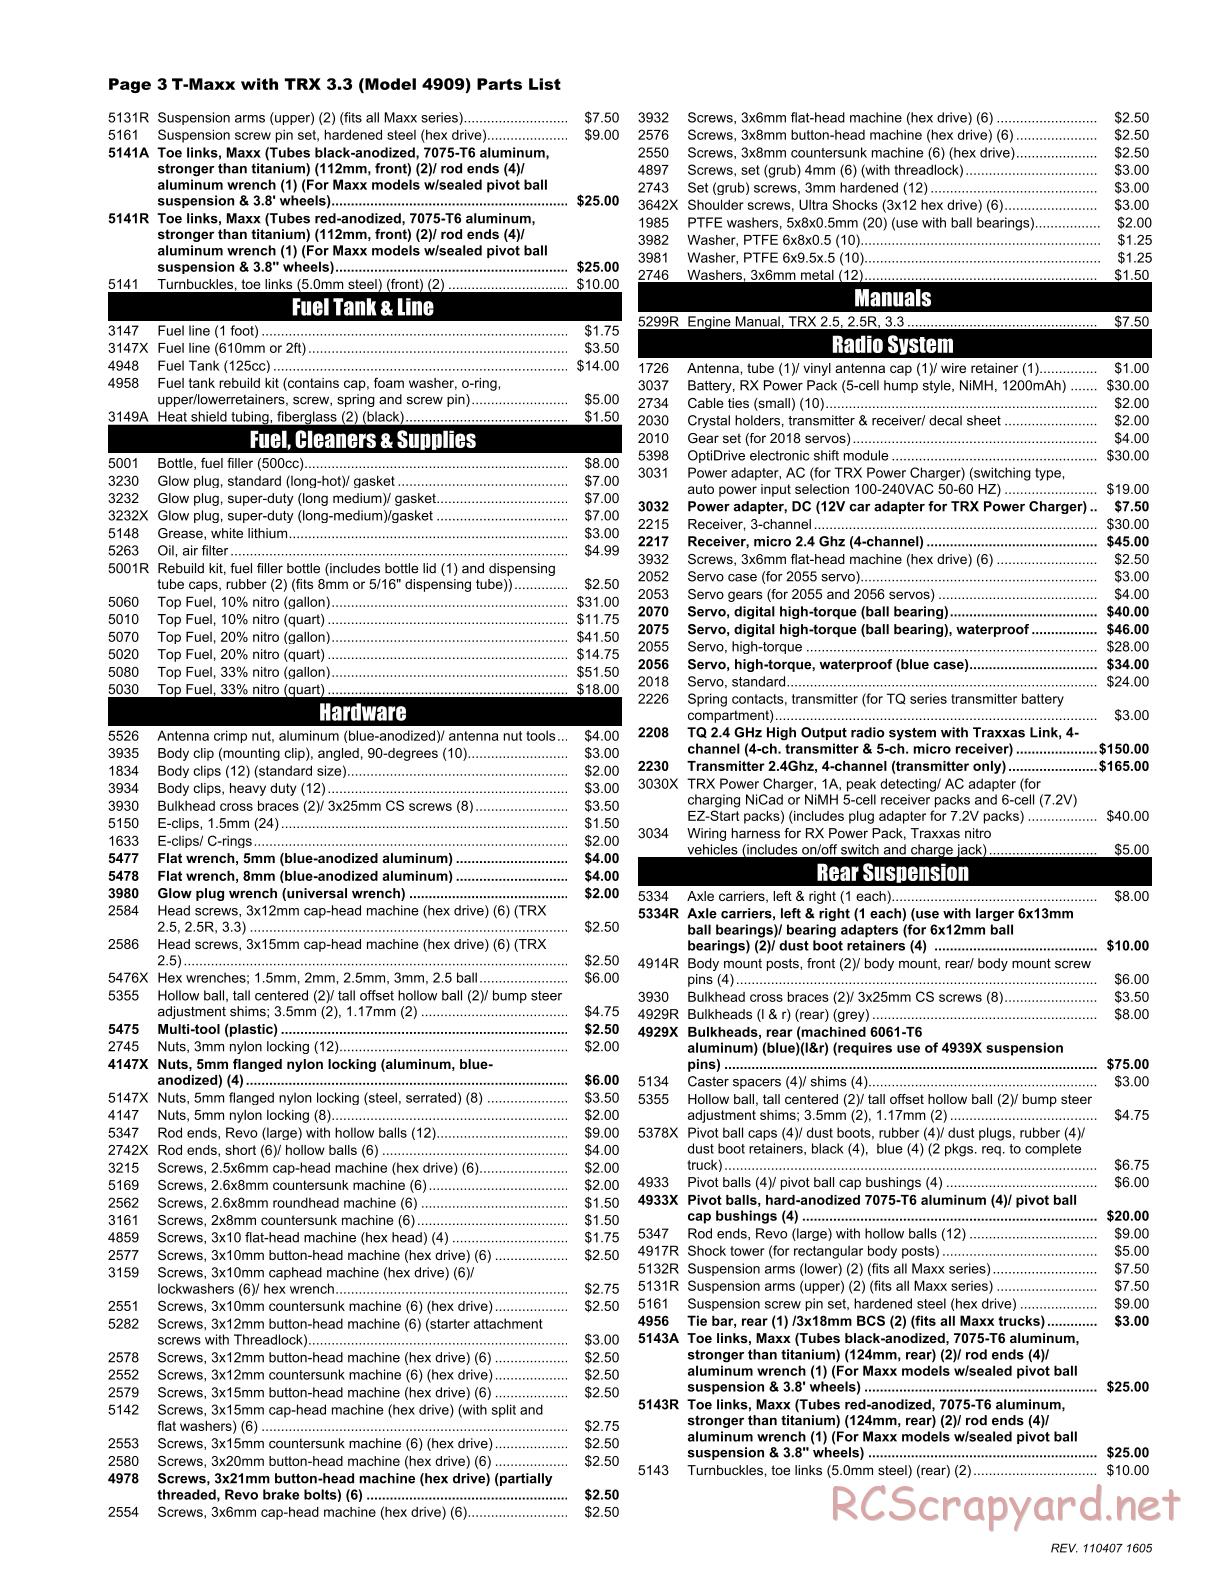 Traxxas - T-Maxx 3.3 (2006) - Parts List - Page 3